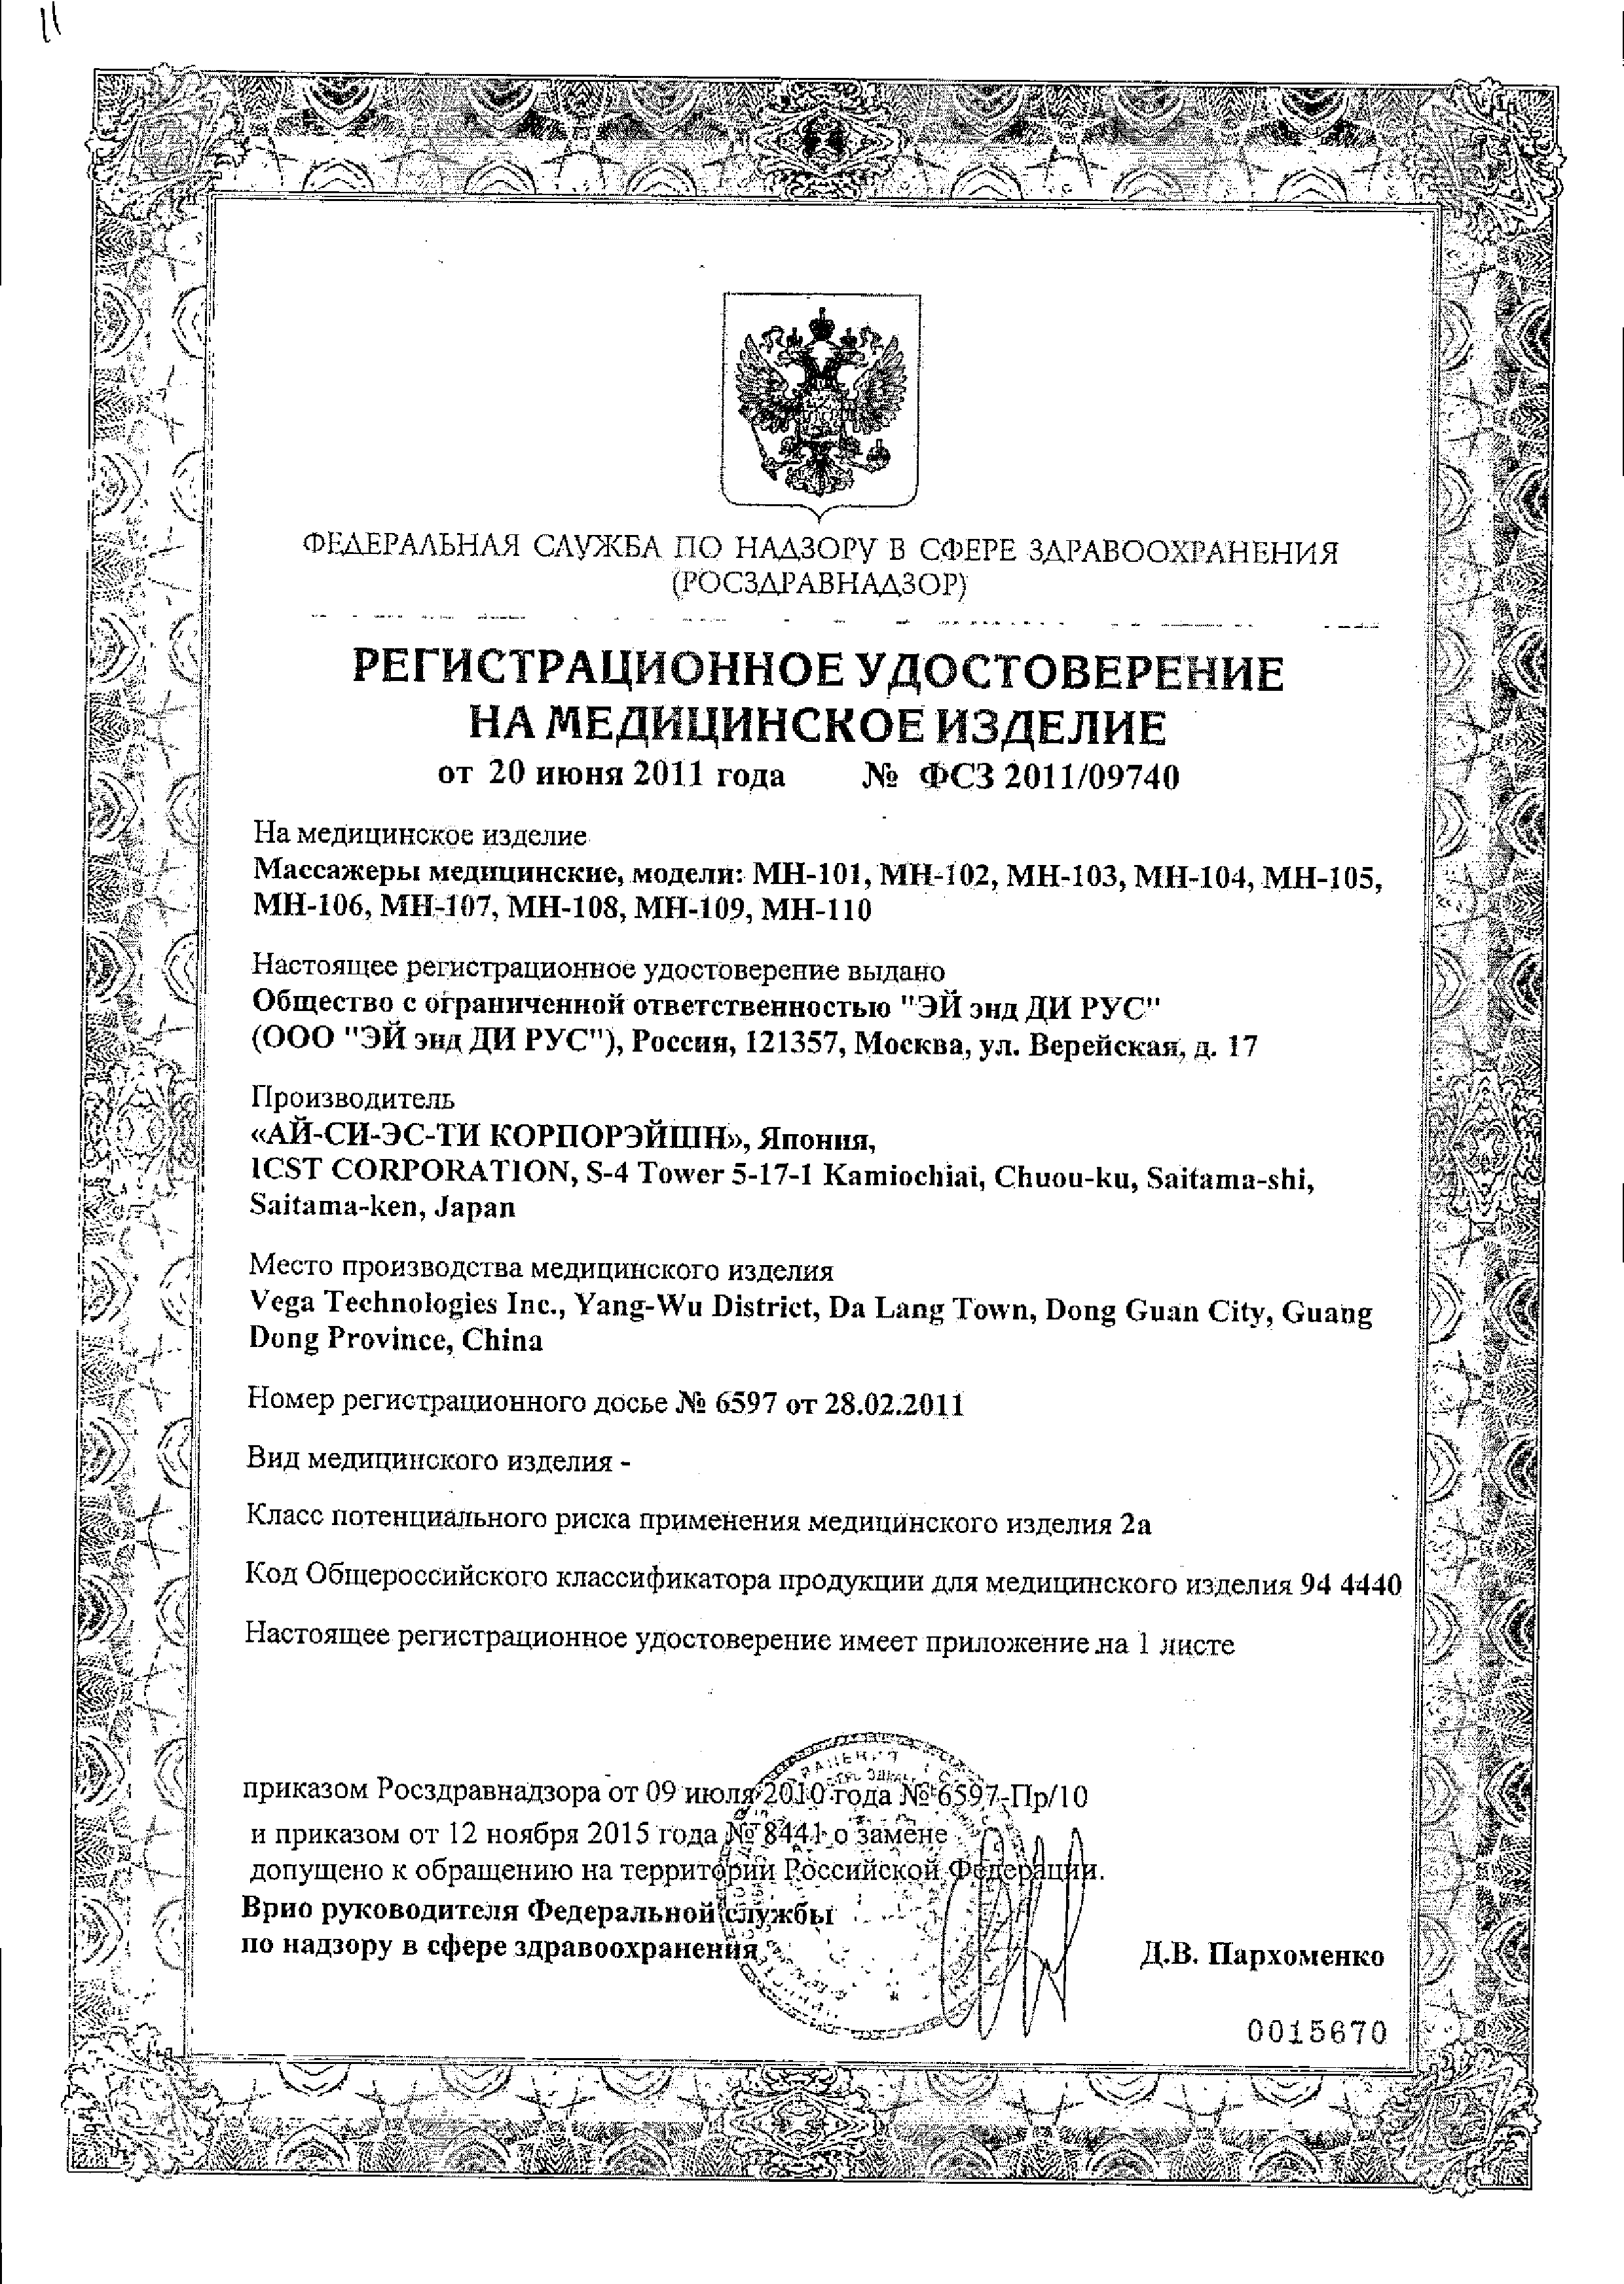 Массажер медицинский сертификат